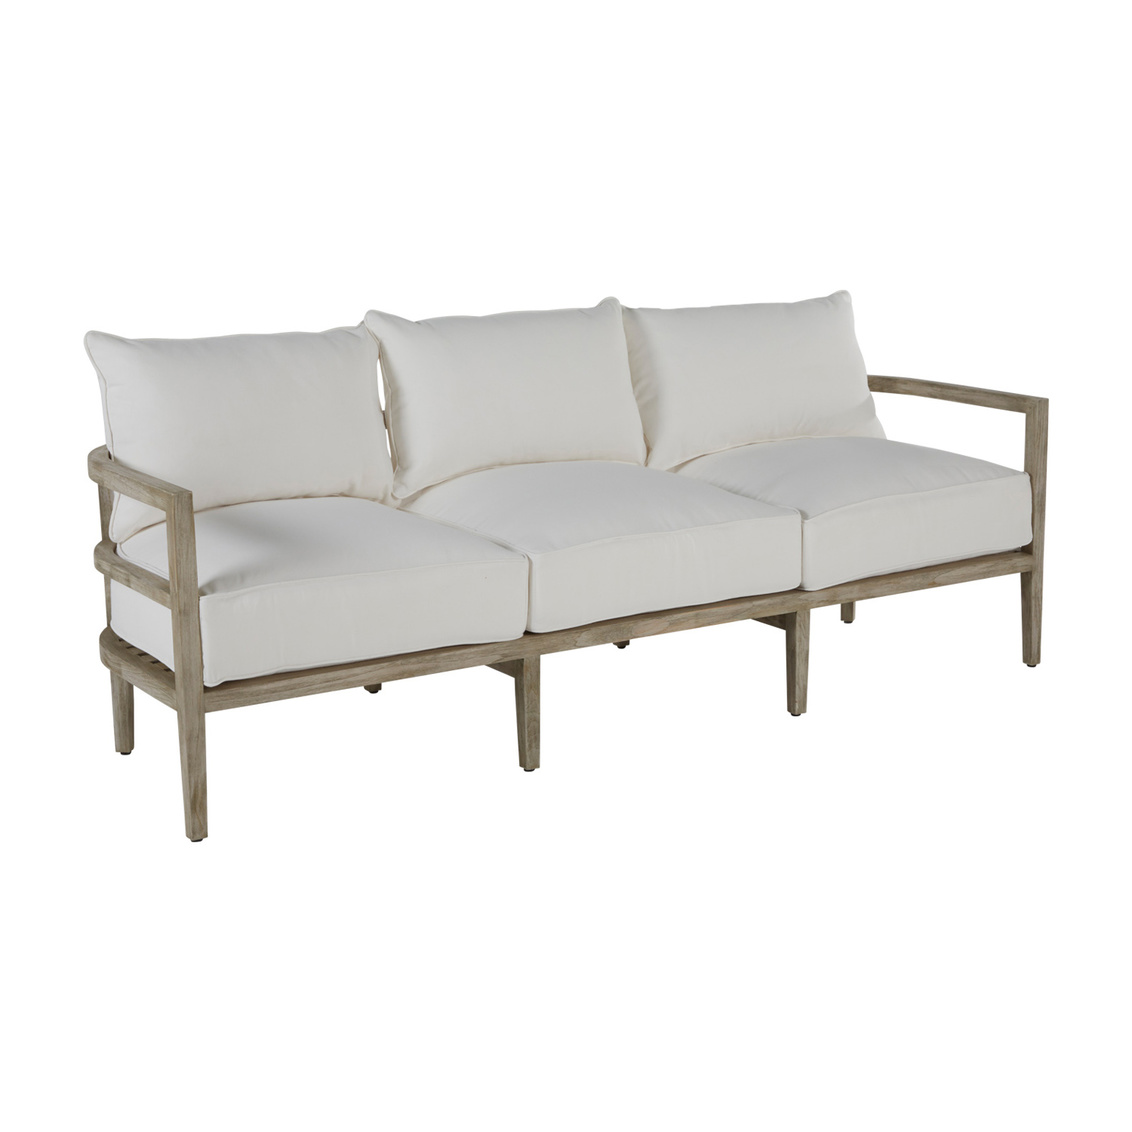 santa barbara teak sofa in oyster teak – frame only product image